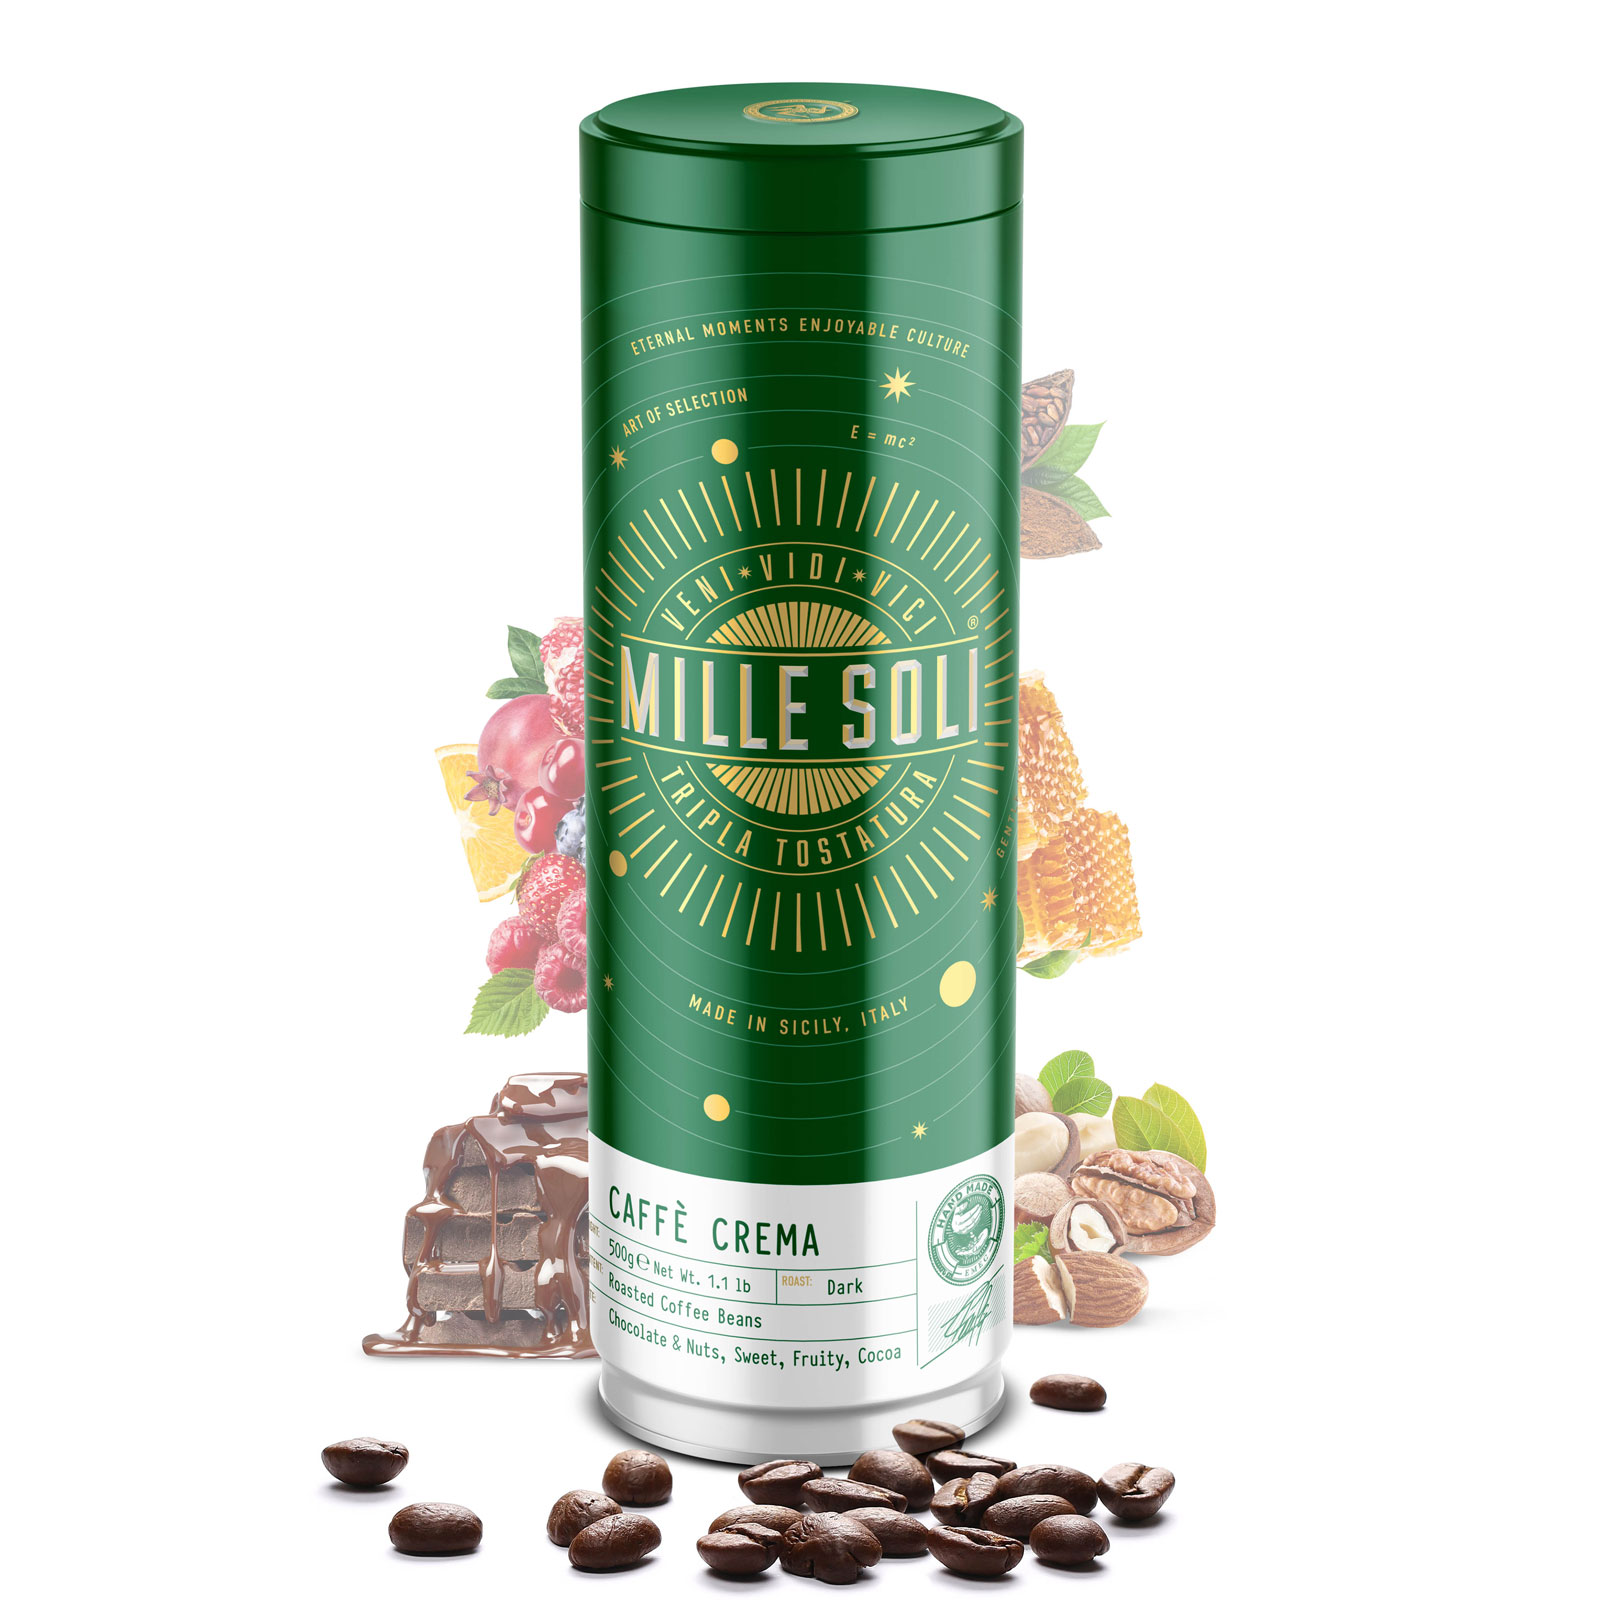 MILLE SOLI - Caffè Crema - 500g - Beans